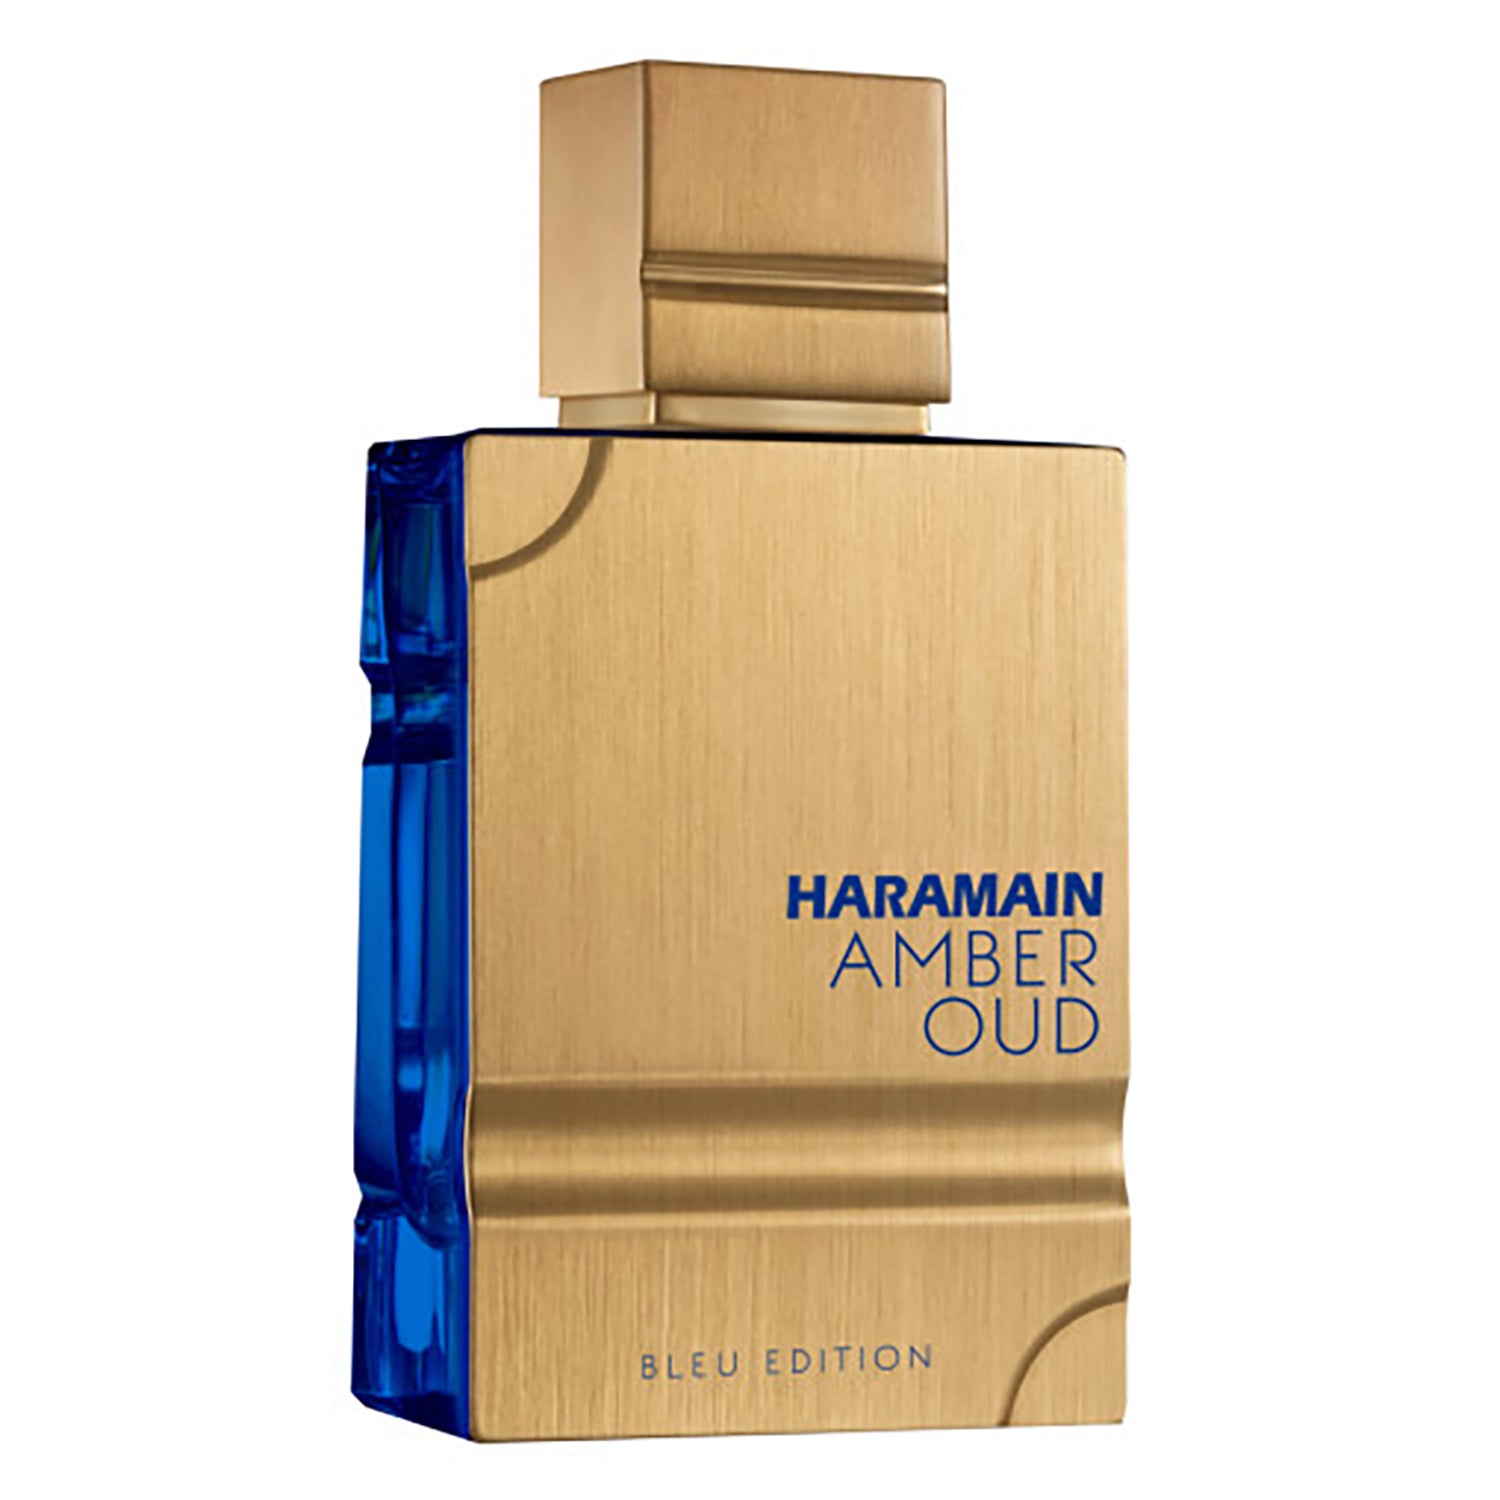 Al Haramain Amber Oud Bleu Edition Eau the Parfum Unisex